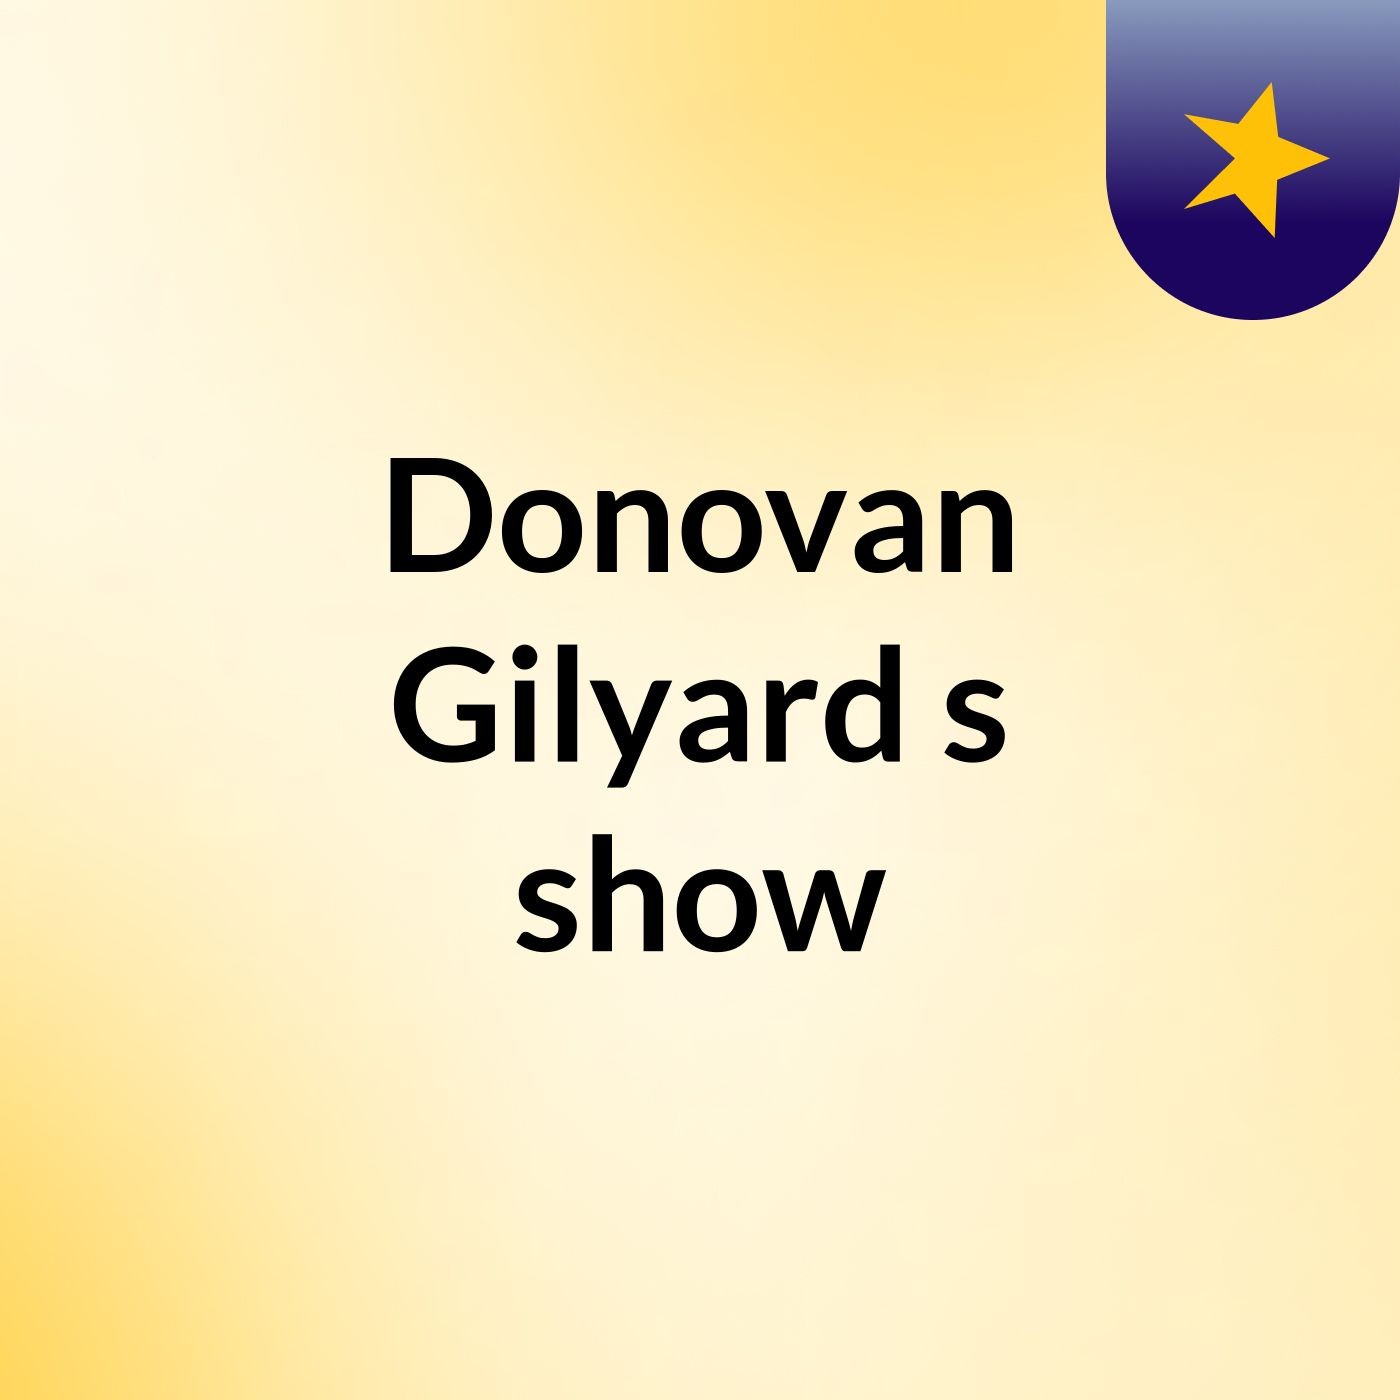 Donovan Gilyard's show